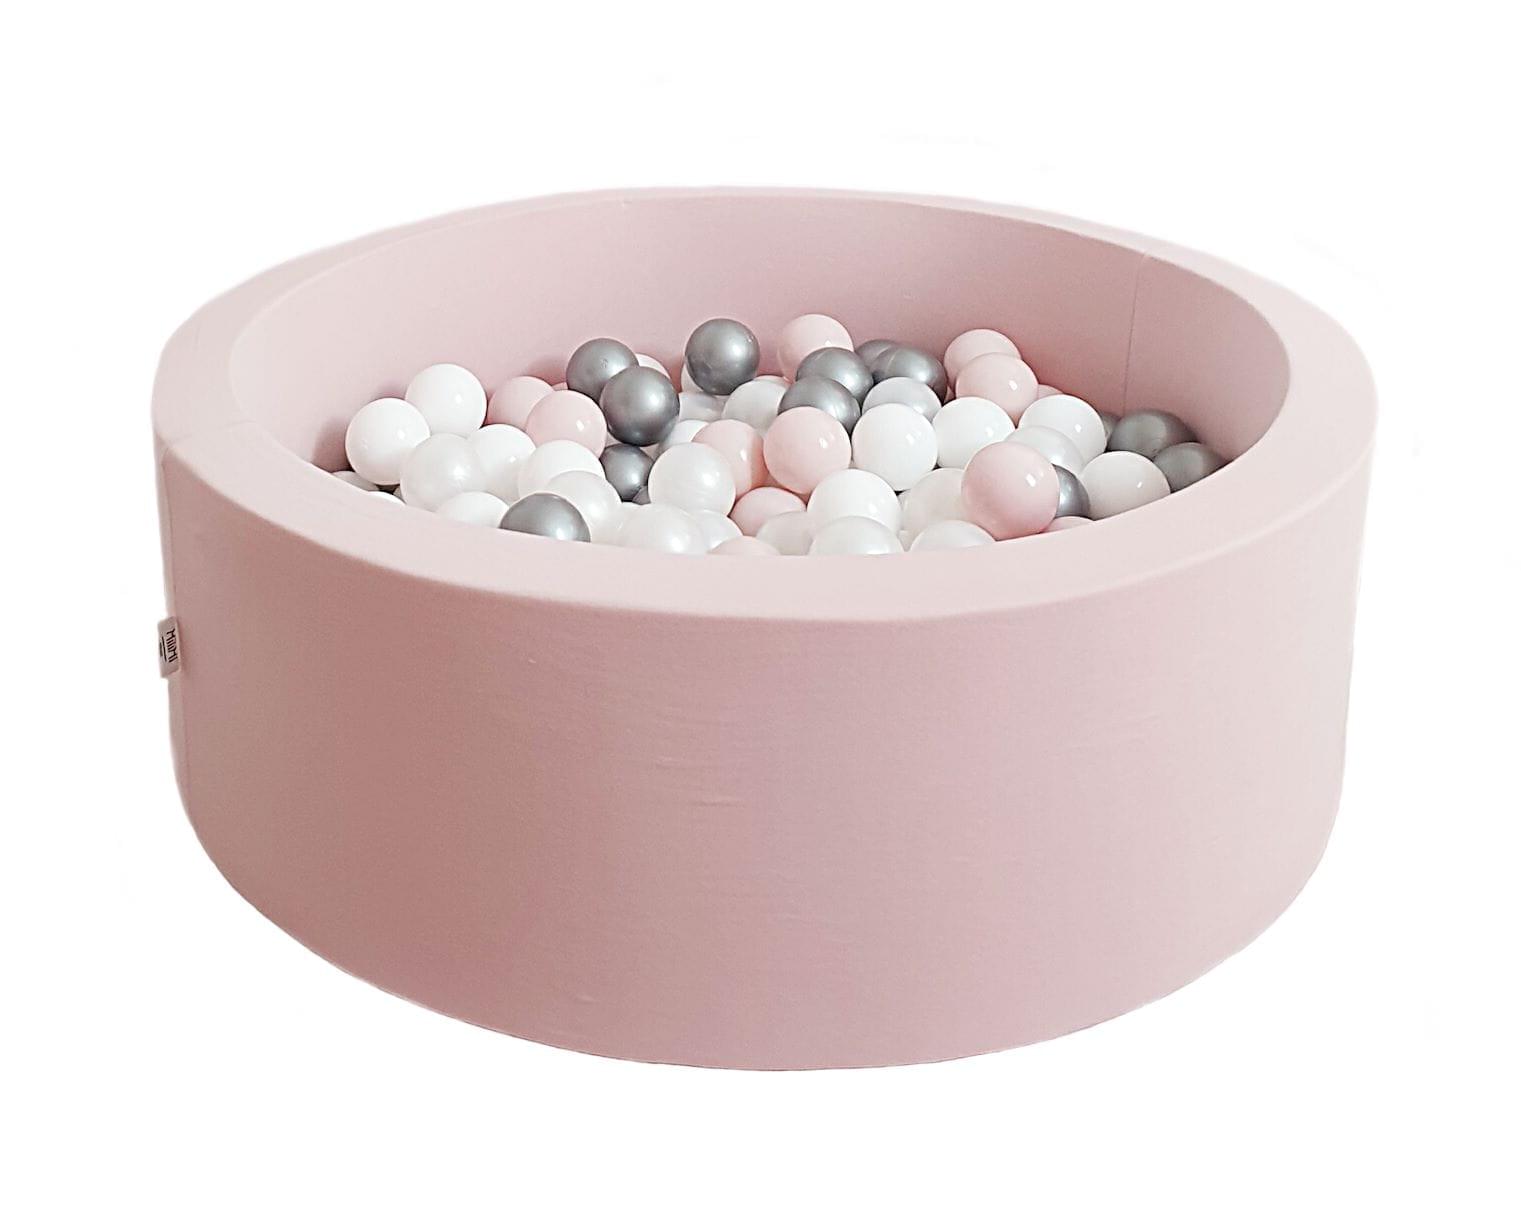 Piscina 200 bolas LIGHT GREY Minibe powder pink-gris-blanco